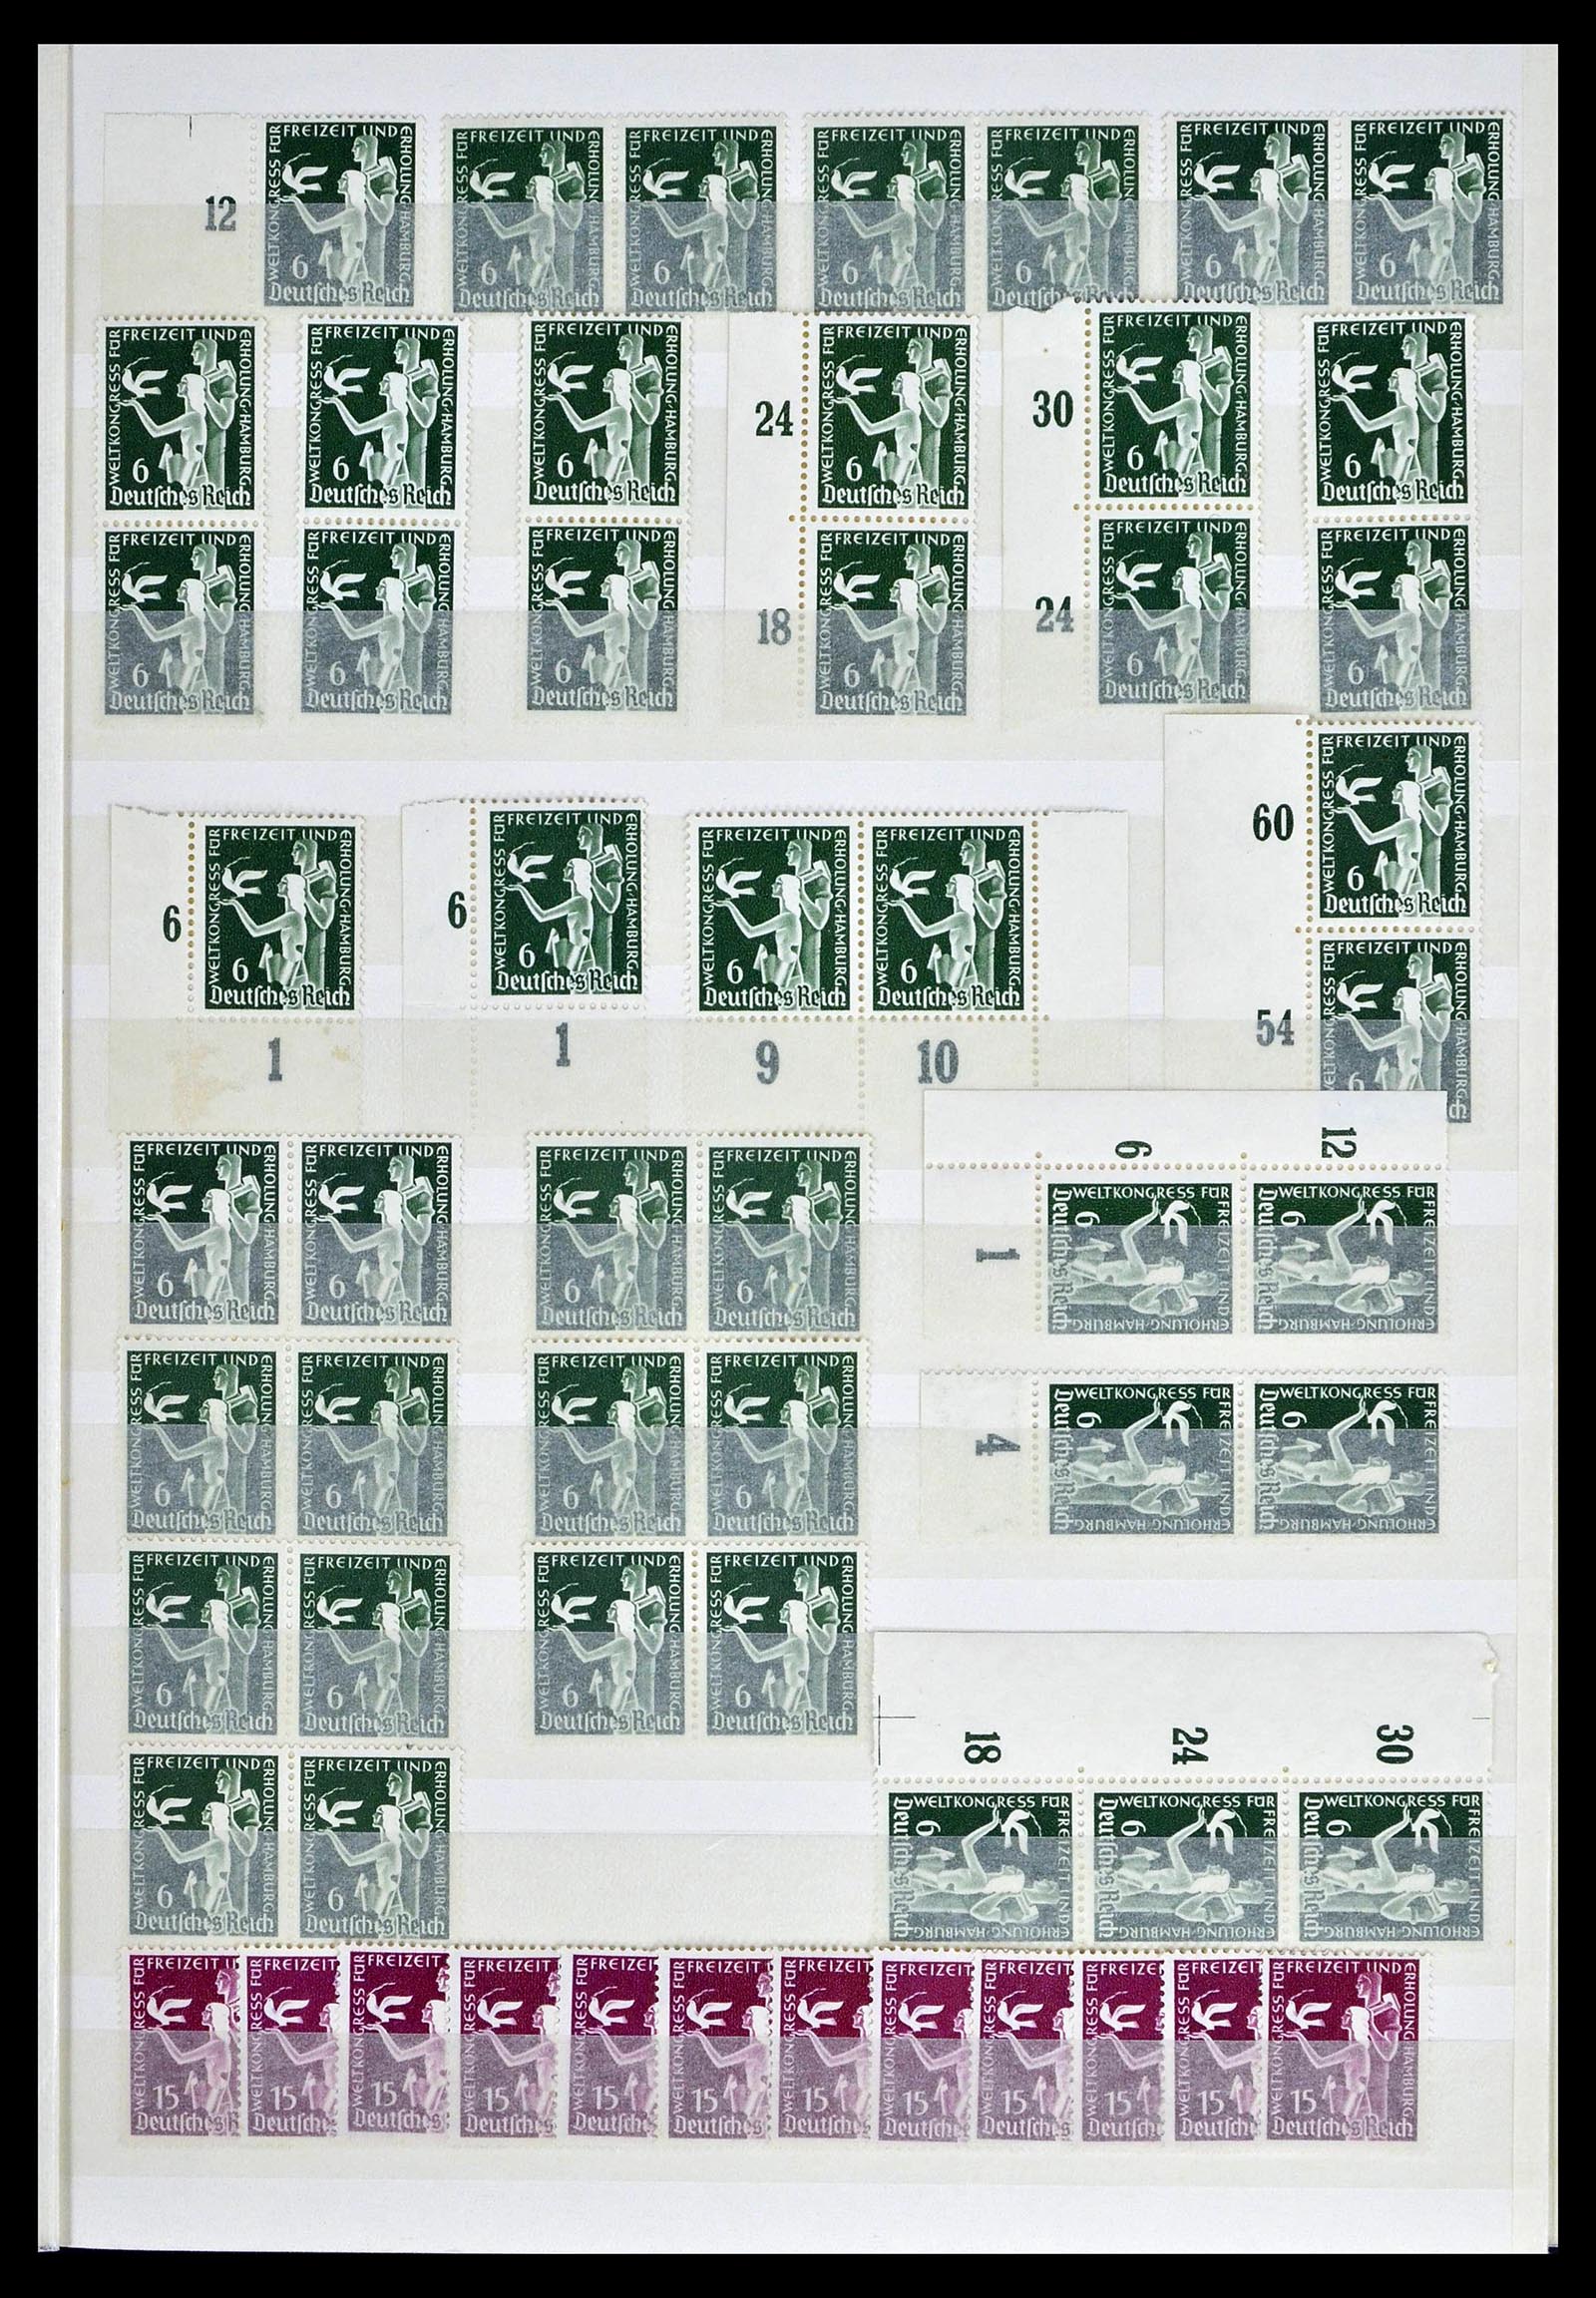 39256 0035 - Stamp collection 39256 German Reich MNH.